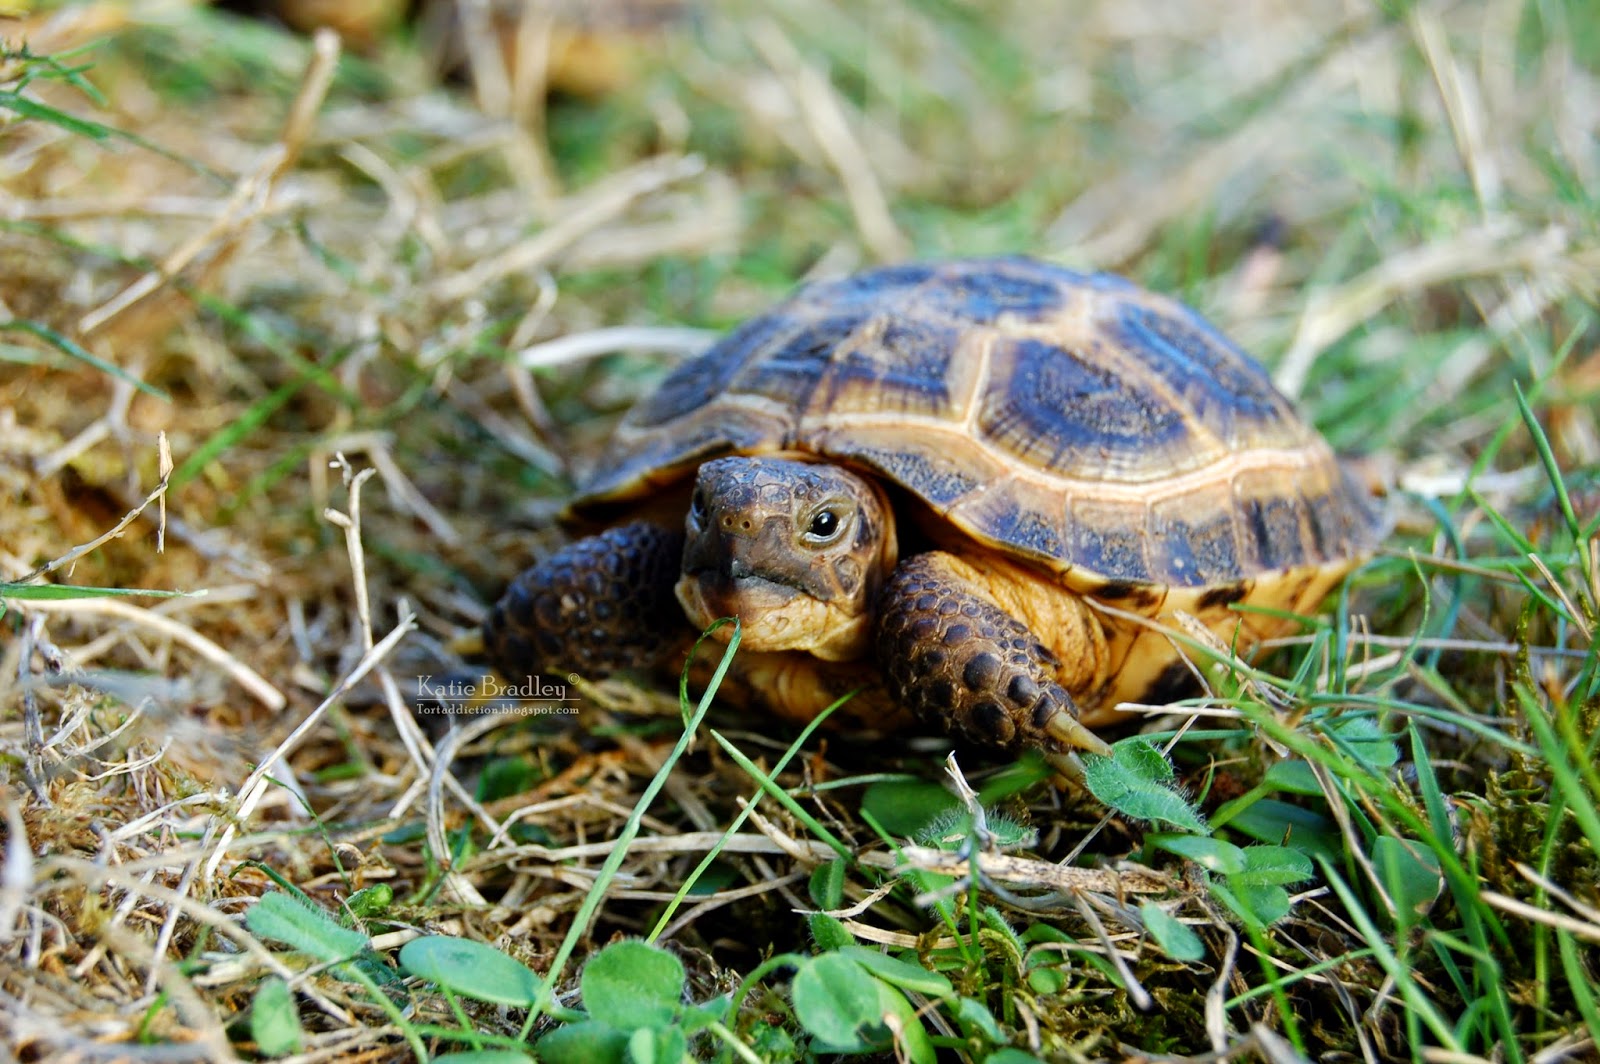 Russian Tortoise Facts | Anatomy, Diet, Habitat, Behavior - Animals Time